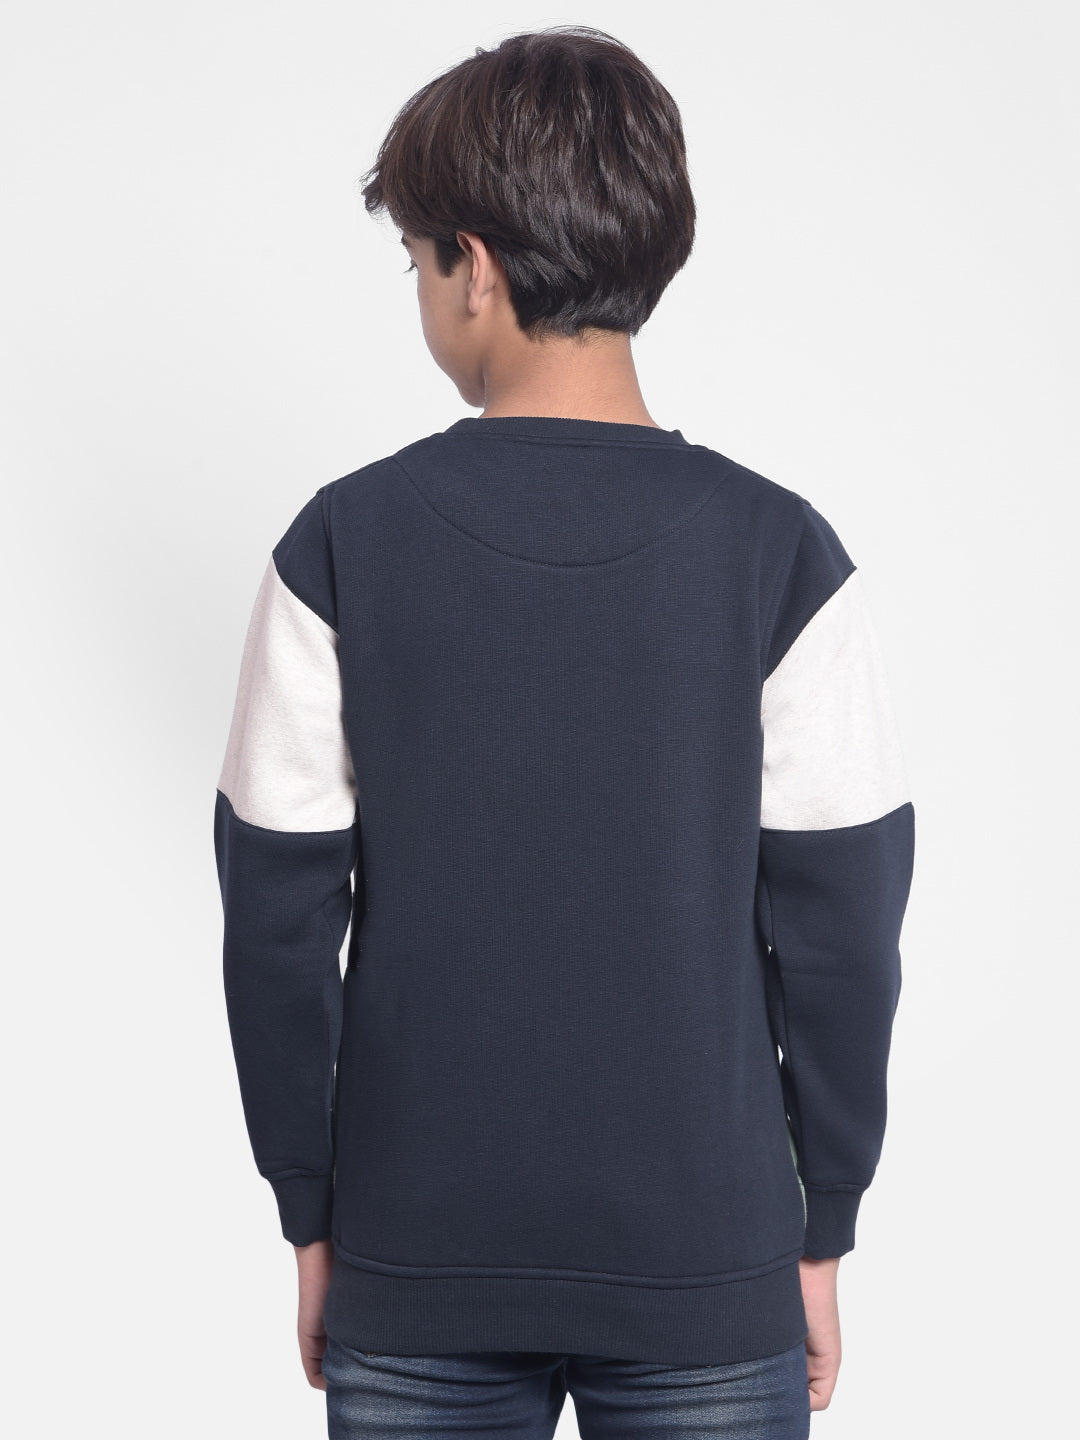 Olive Printed Sweatshirt-Boys Sweatshirt-Crimsoune Club